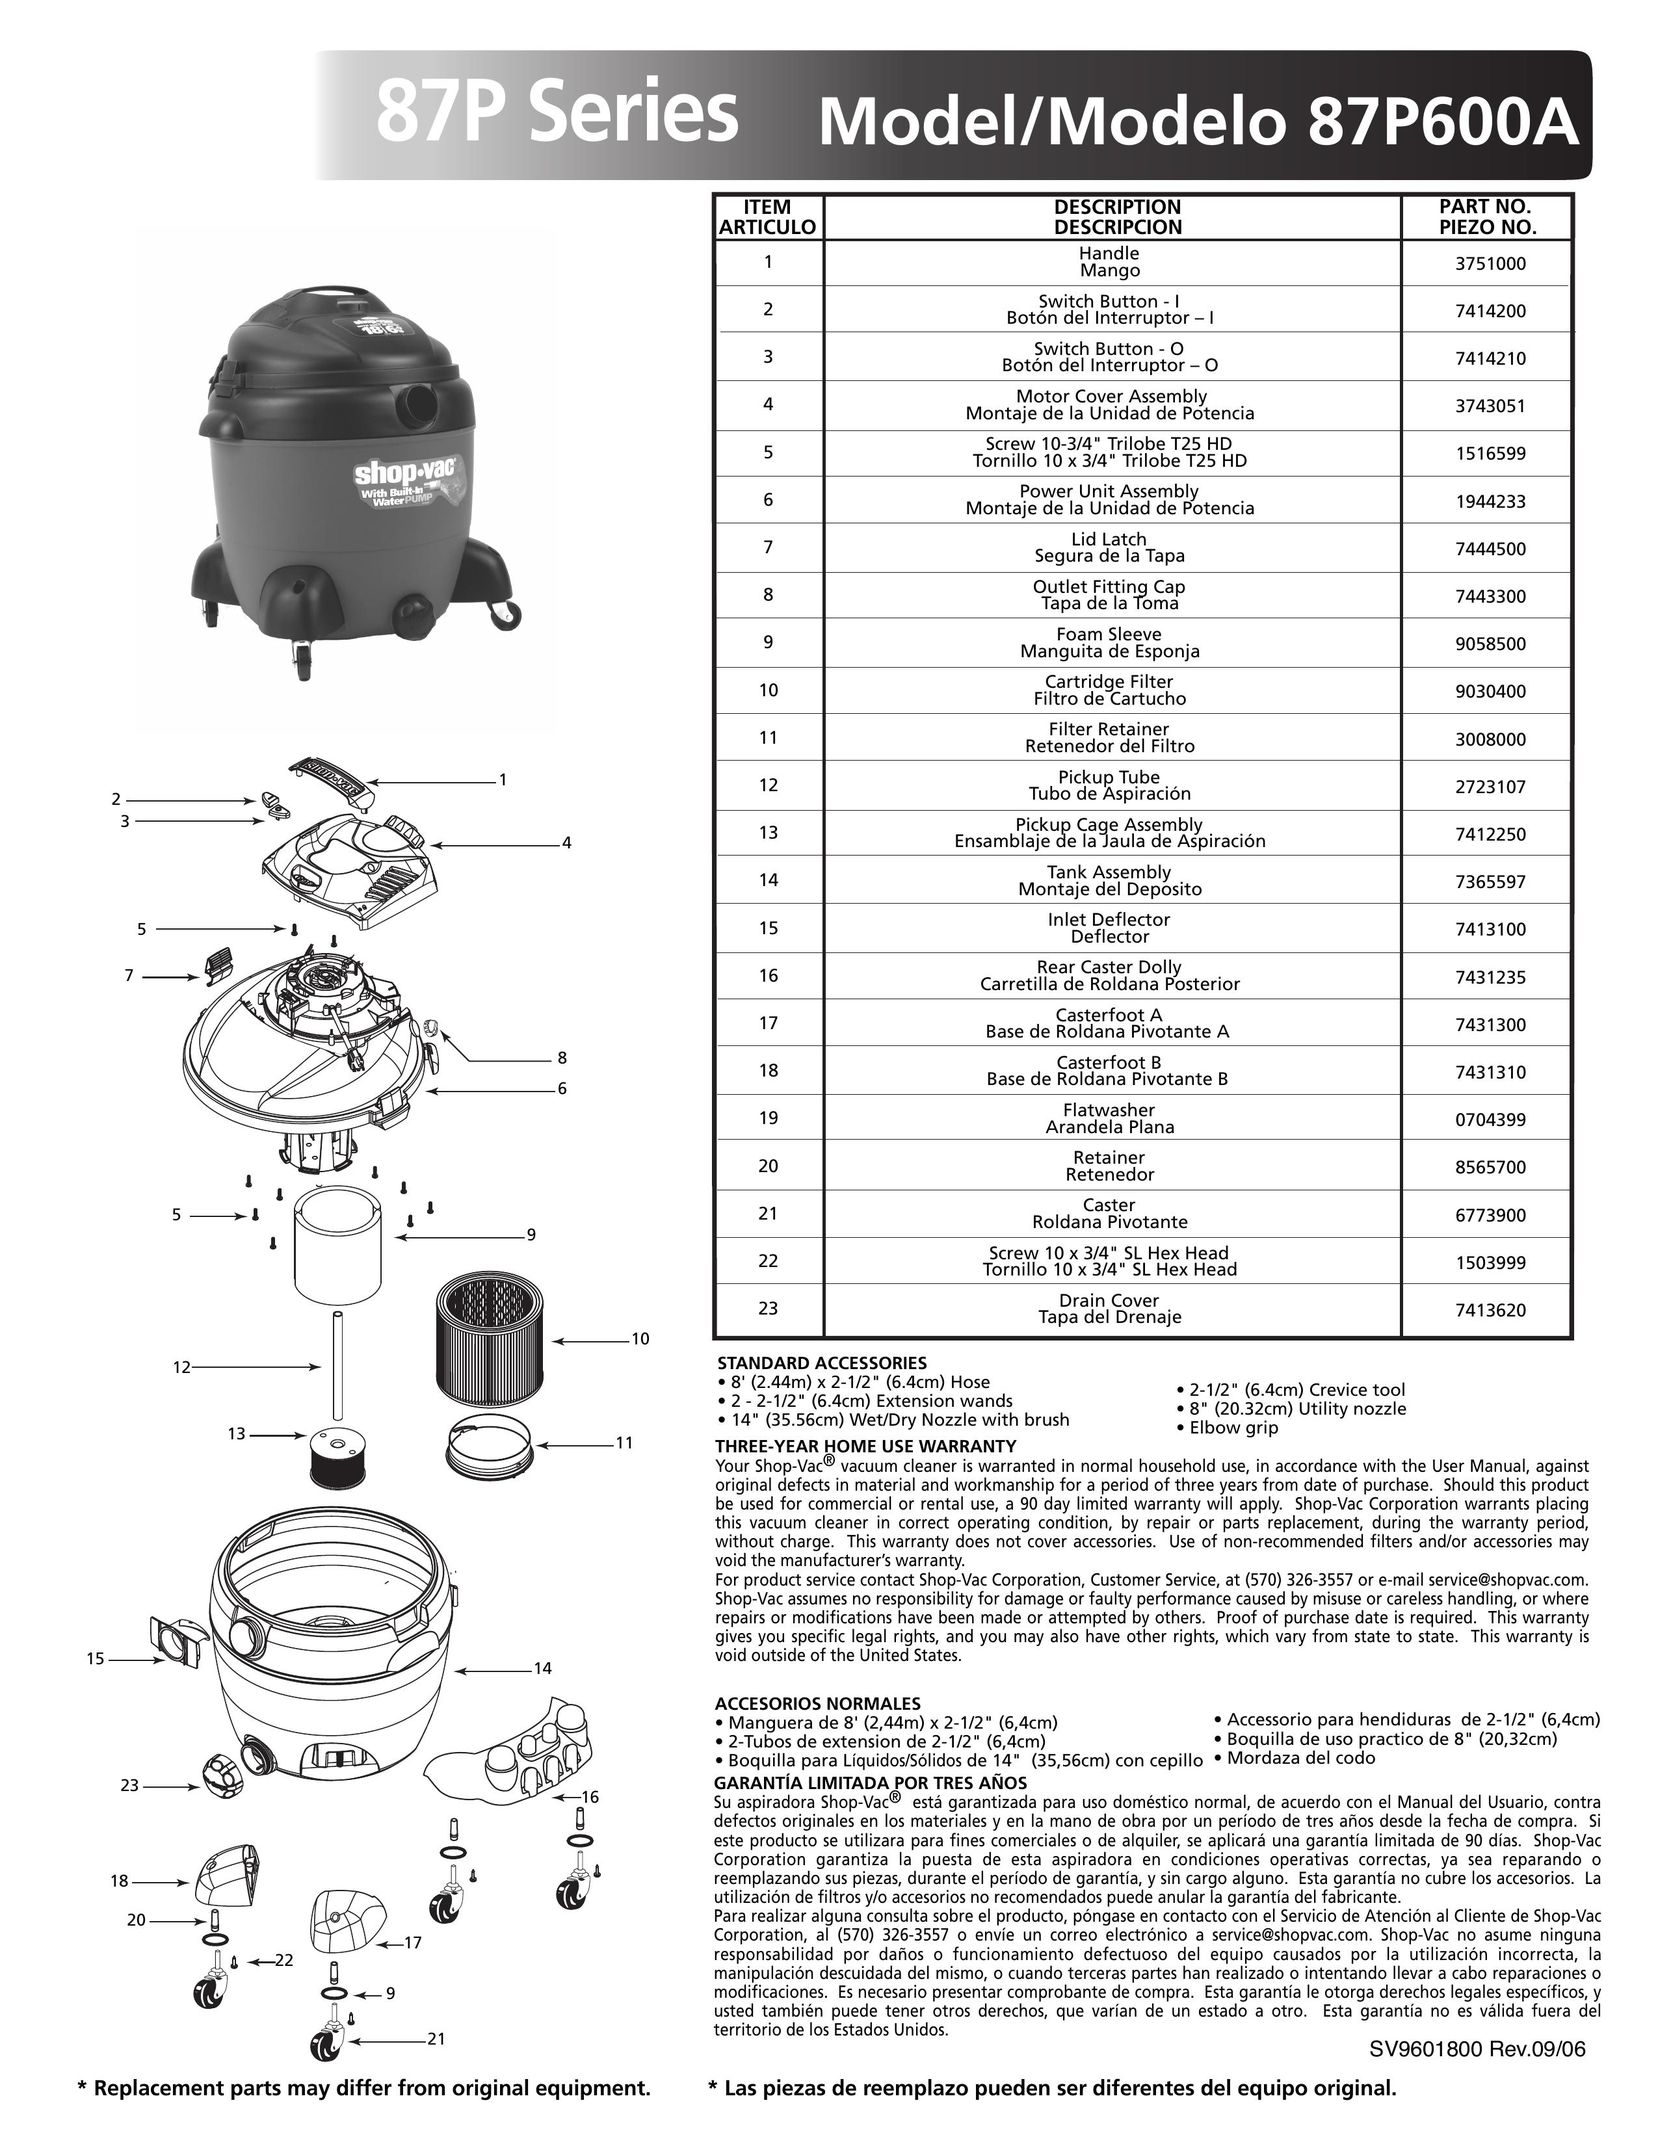 Shop-Vac 87p600a Vacuum Cleaner User Manual